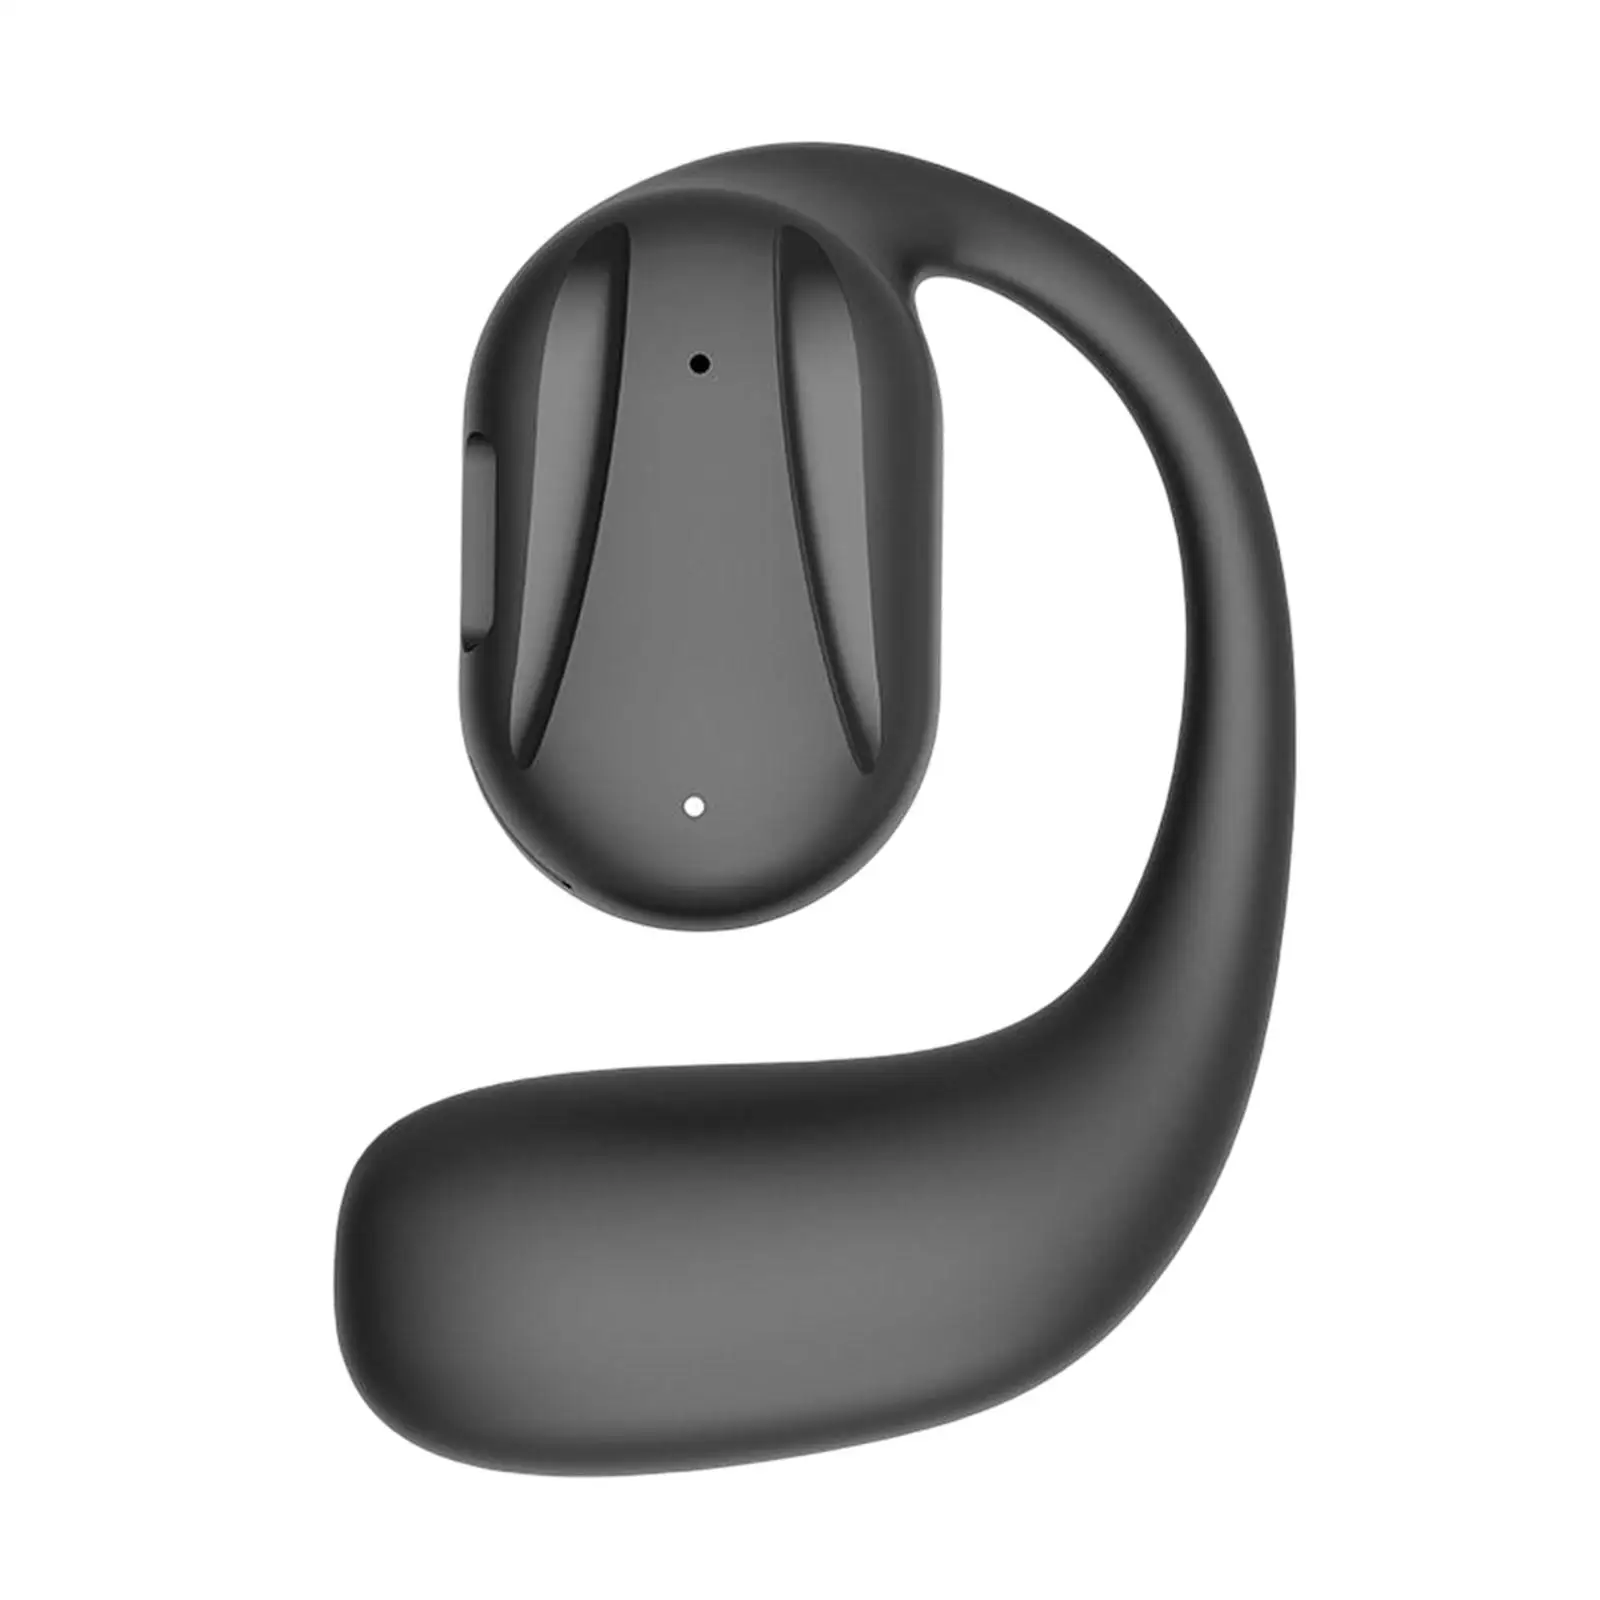 Ear Hook Headset Earpiece Single Ear Headphones for Running Work Driving Business